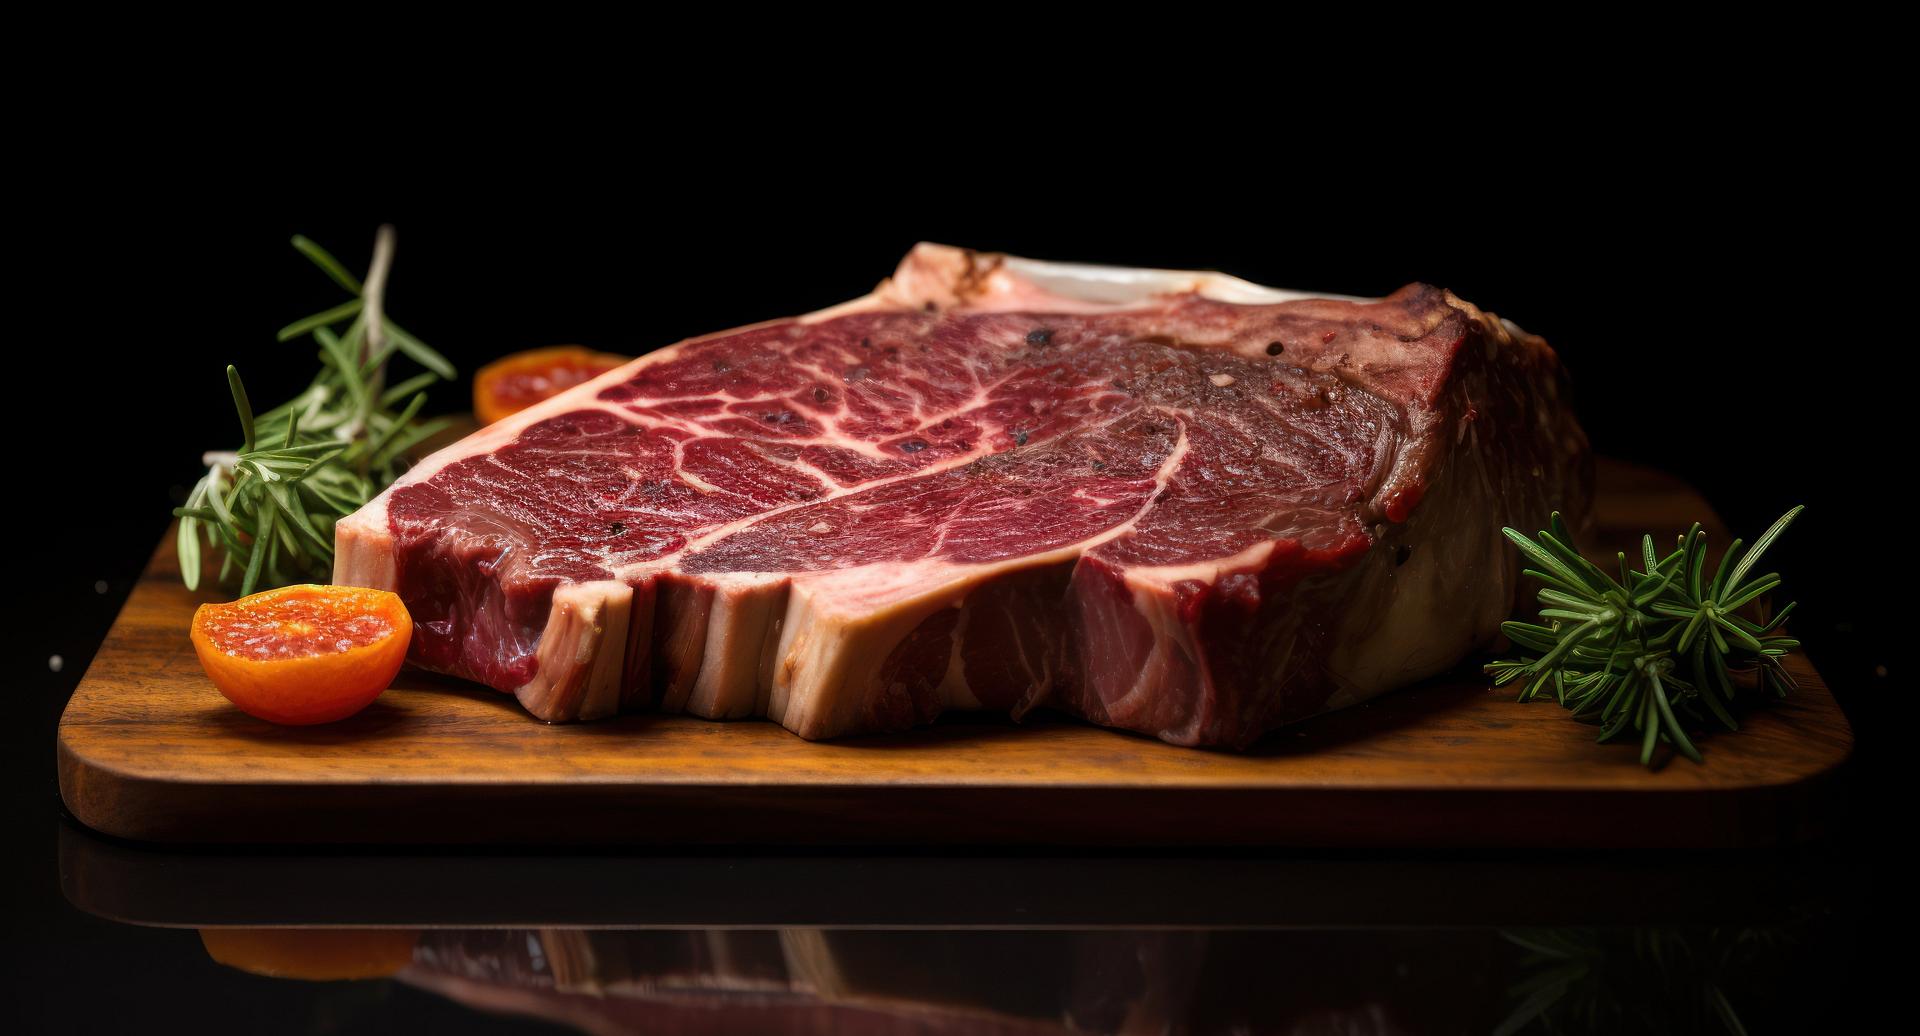 Steak menu with matured beef